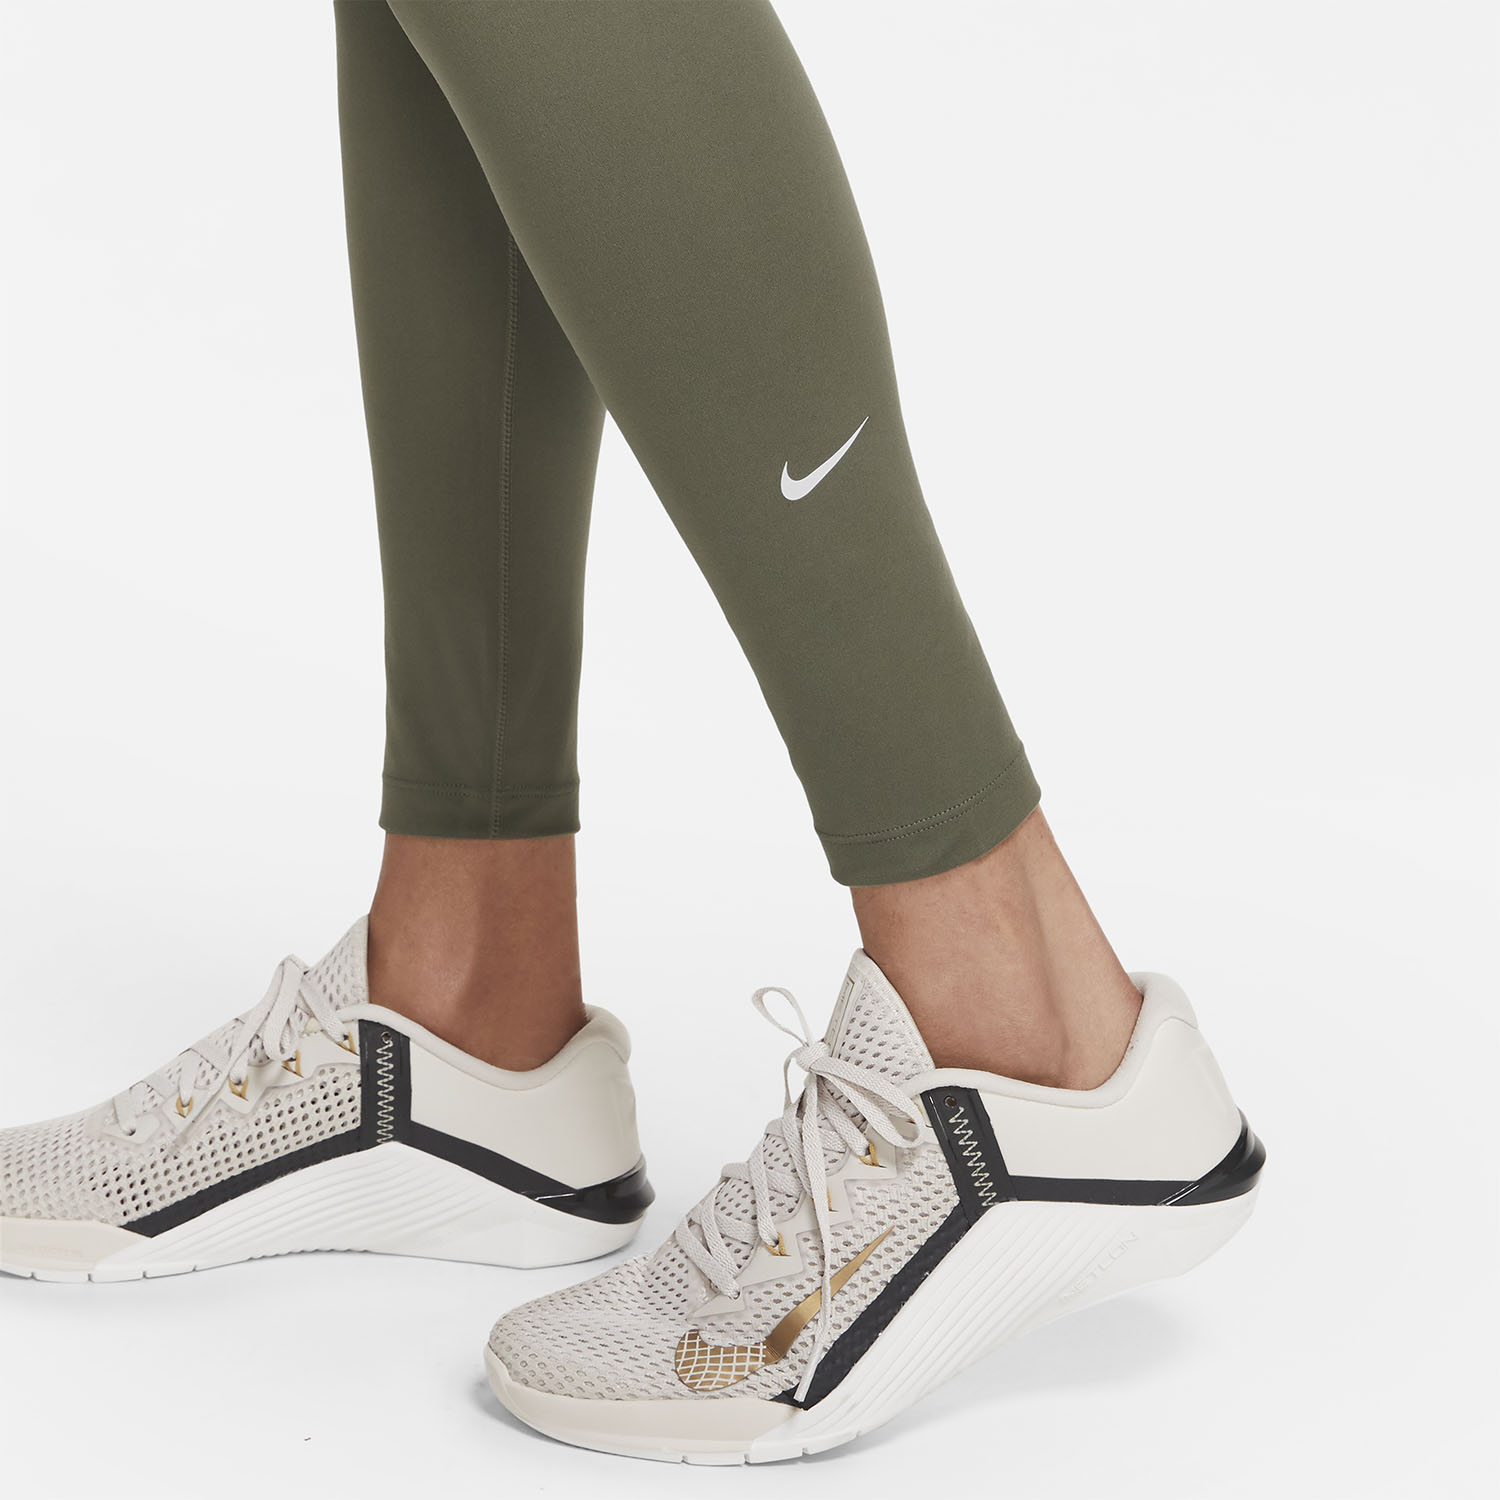 Nike One Tights - Medium Olive/White